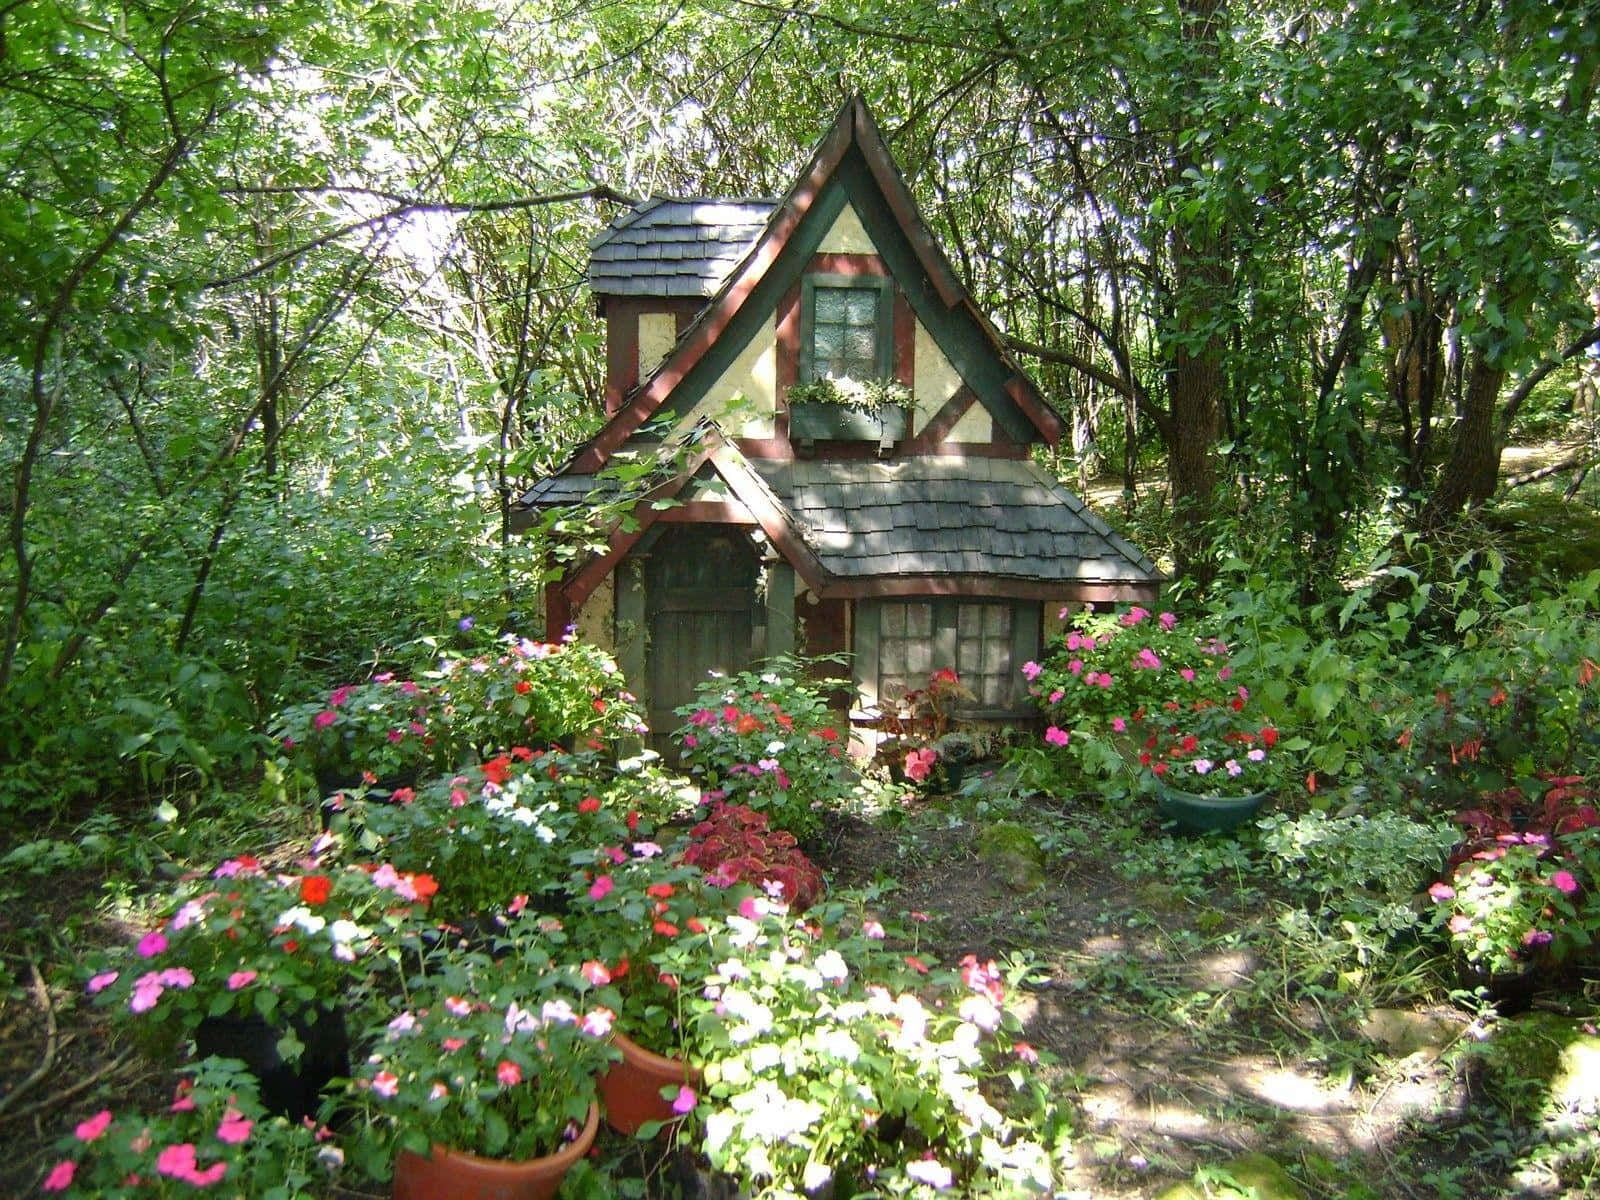 Enchanting Cottage Garden in Full Bloom Wallpaper